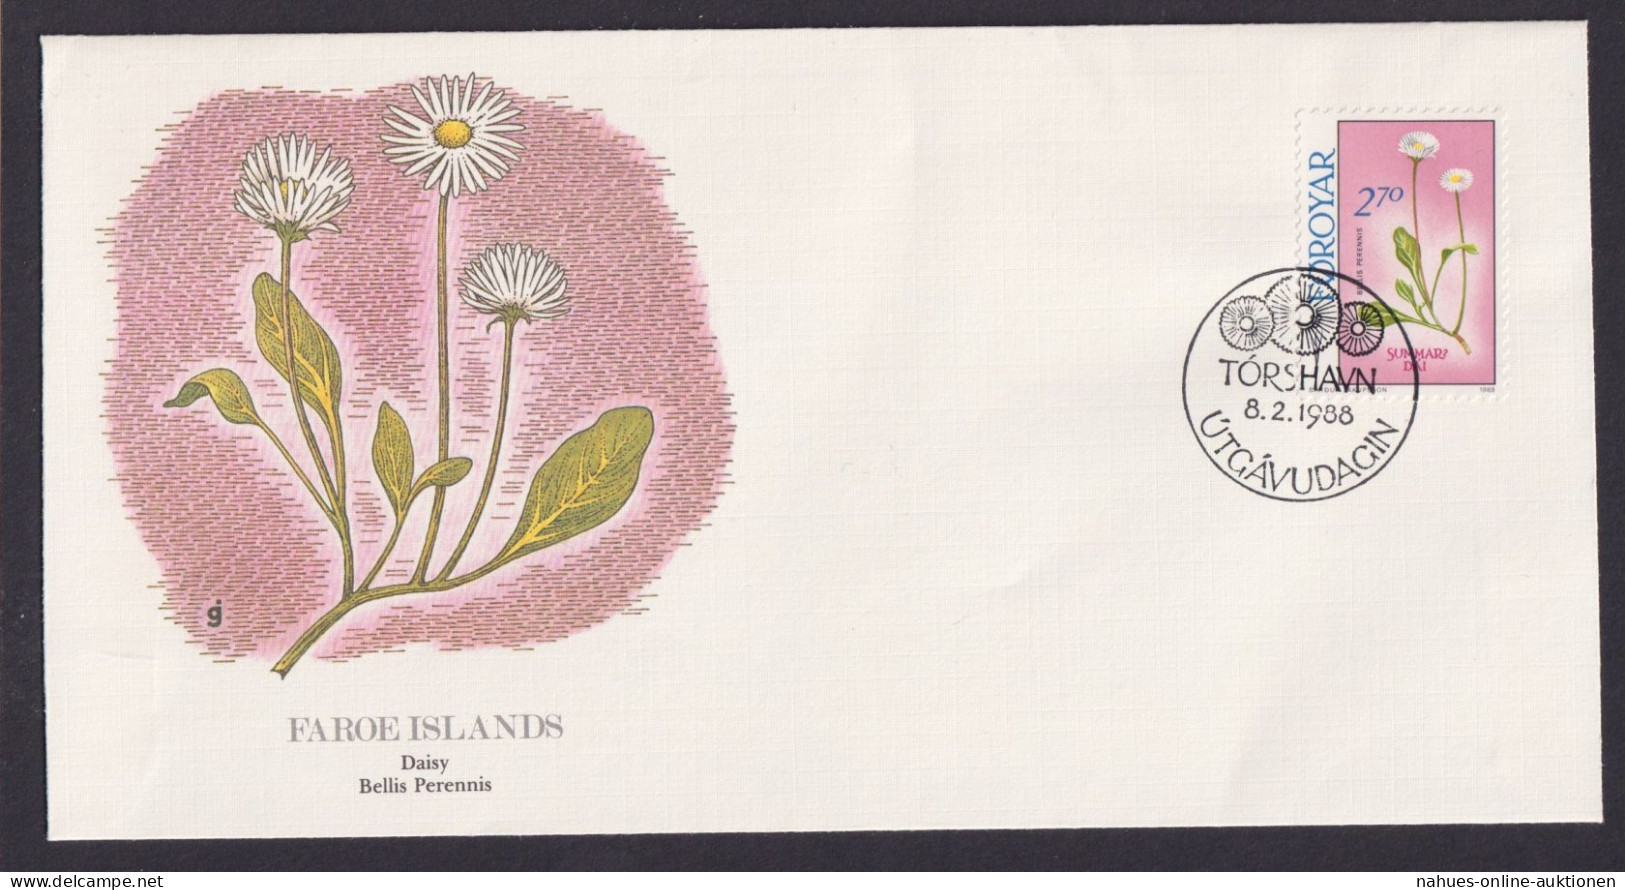 Faroer Dänische Krone Inselgruppe Flora Gänseblümchen Schöner Künstler Brief - Faroe Islands